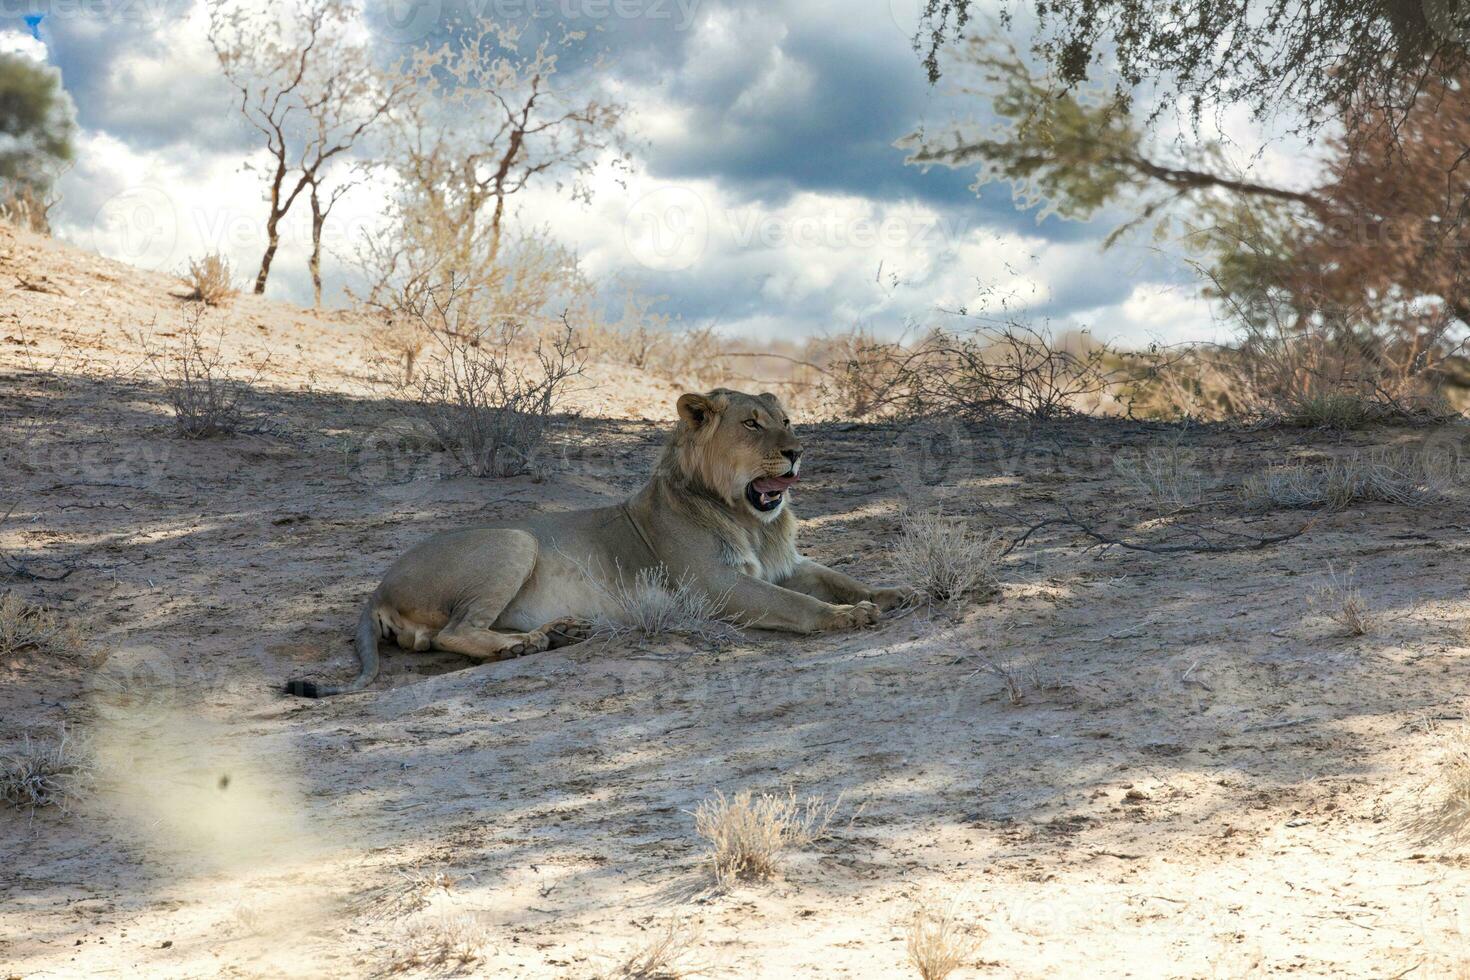 león a kgalagadi transfronterizo parque, sur África foto